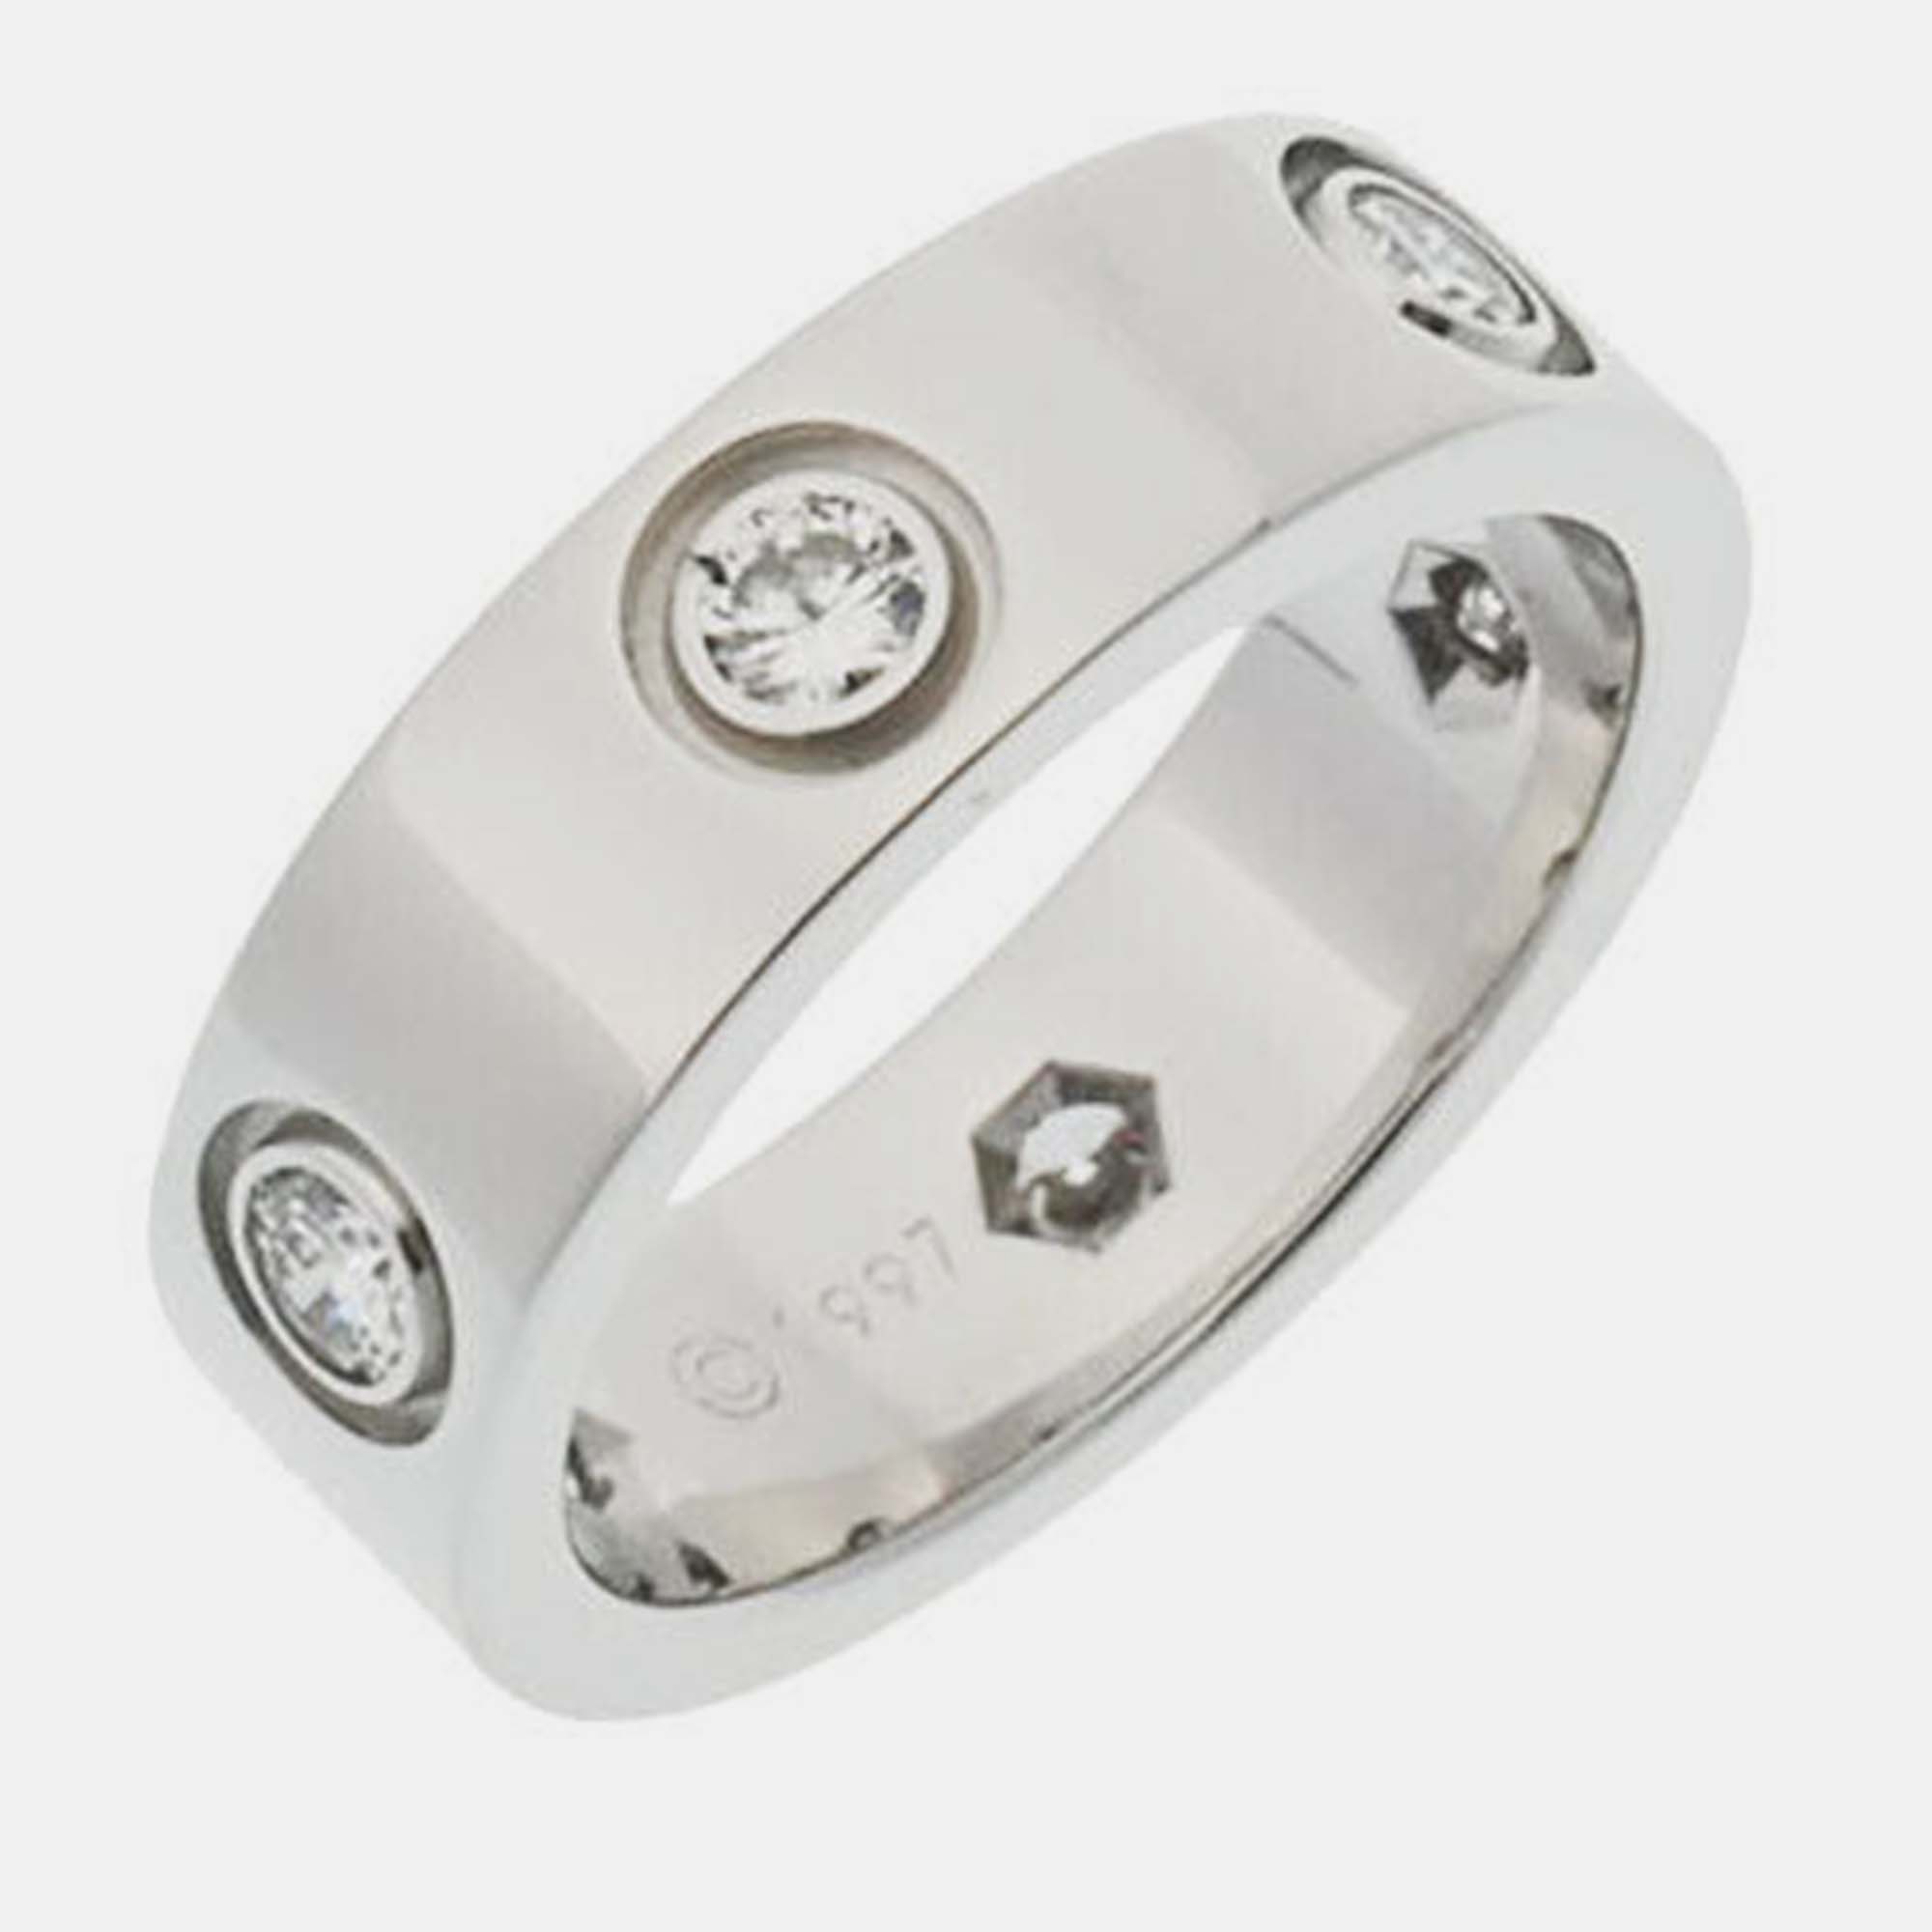 Cartier 18k white gold diamond love ring size 49